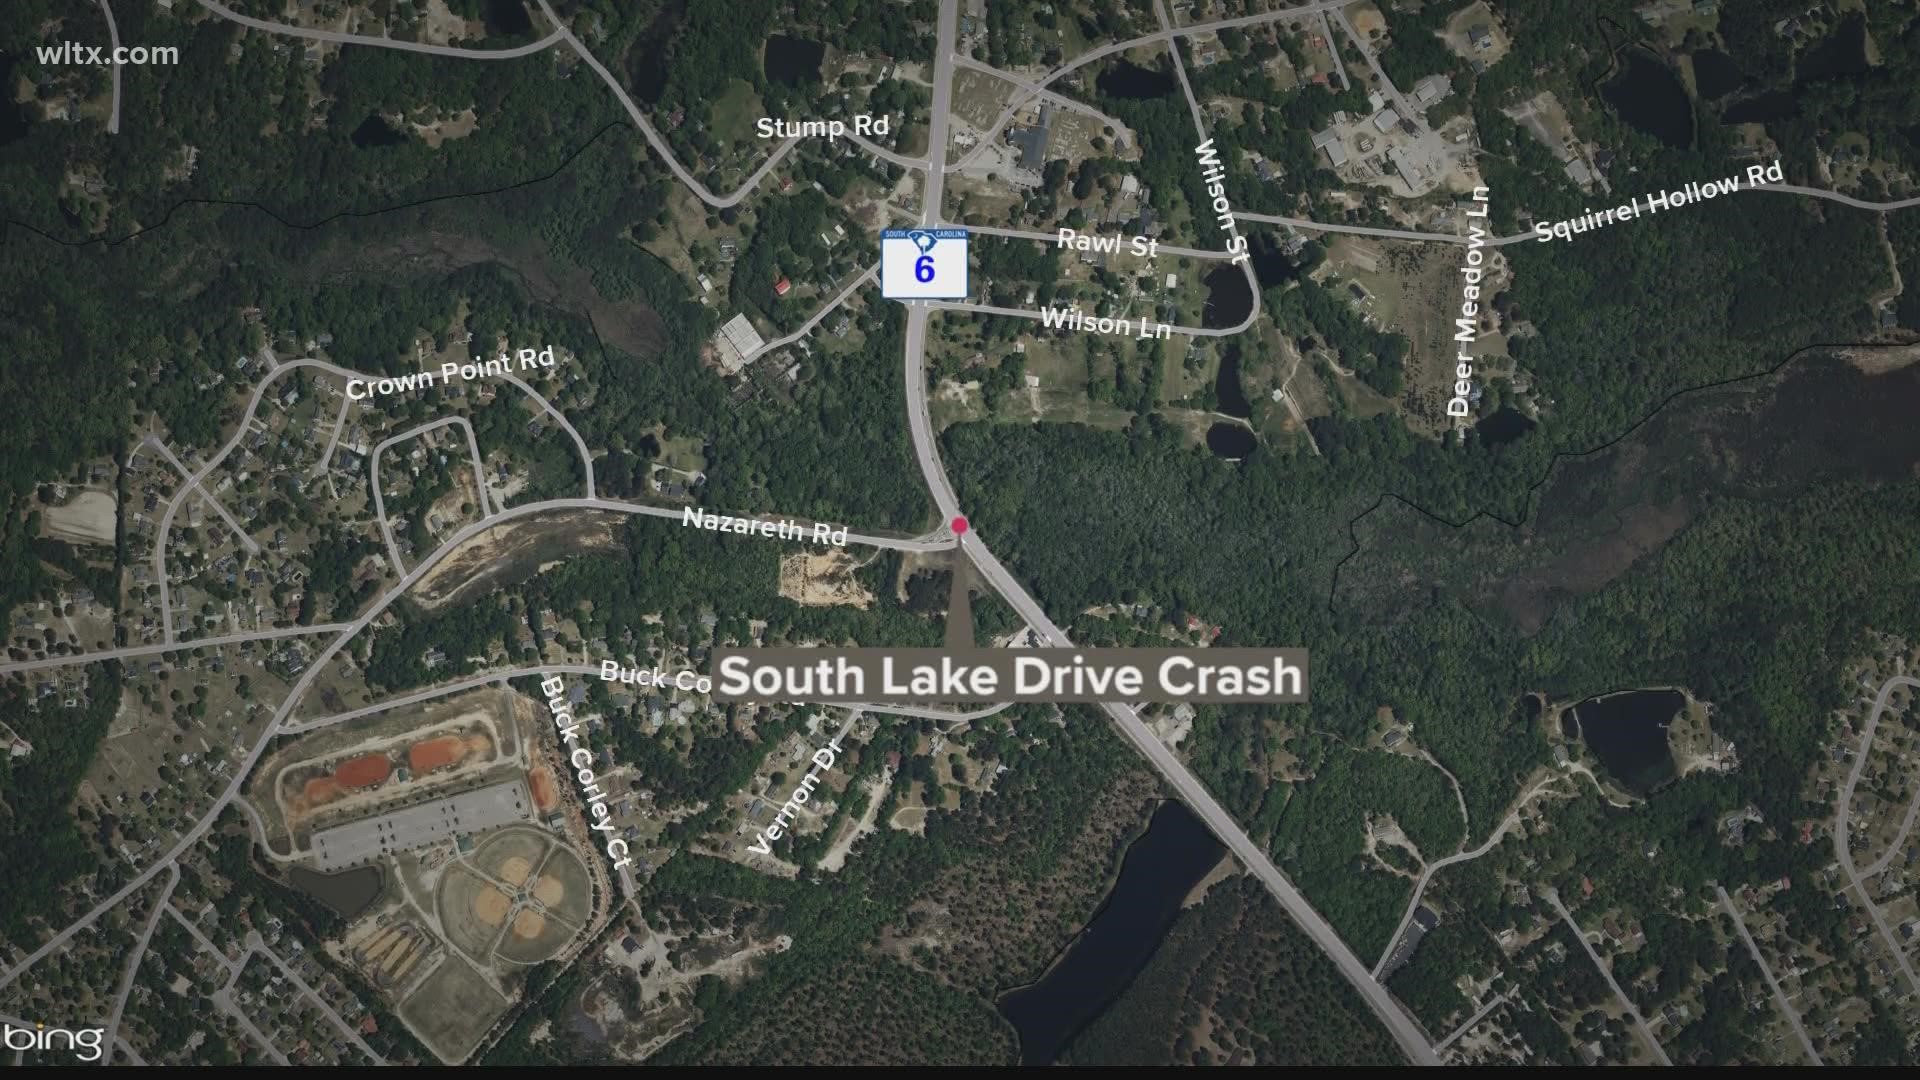 The crash is still under investigation by the South Carolina Highway Patrol.